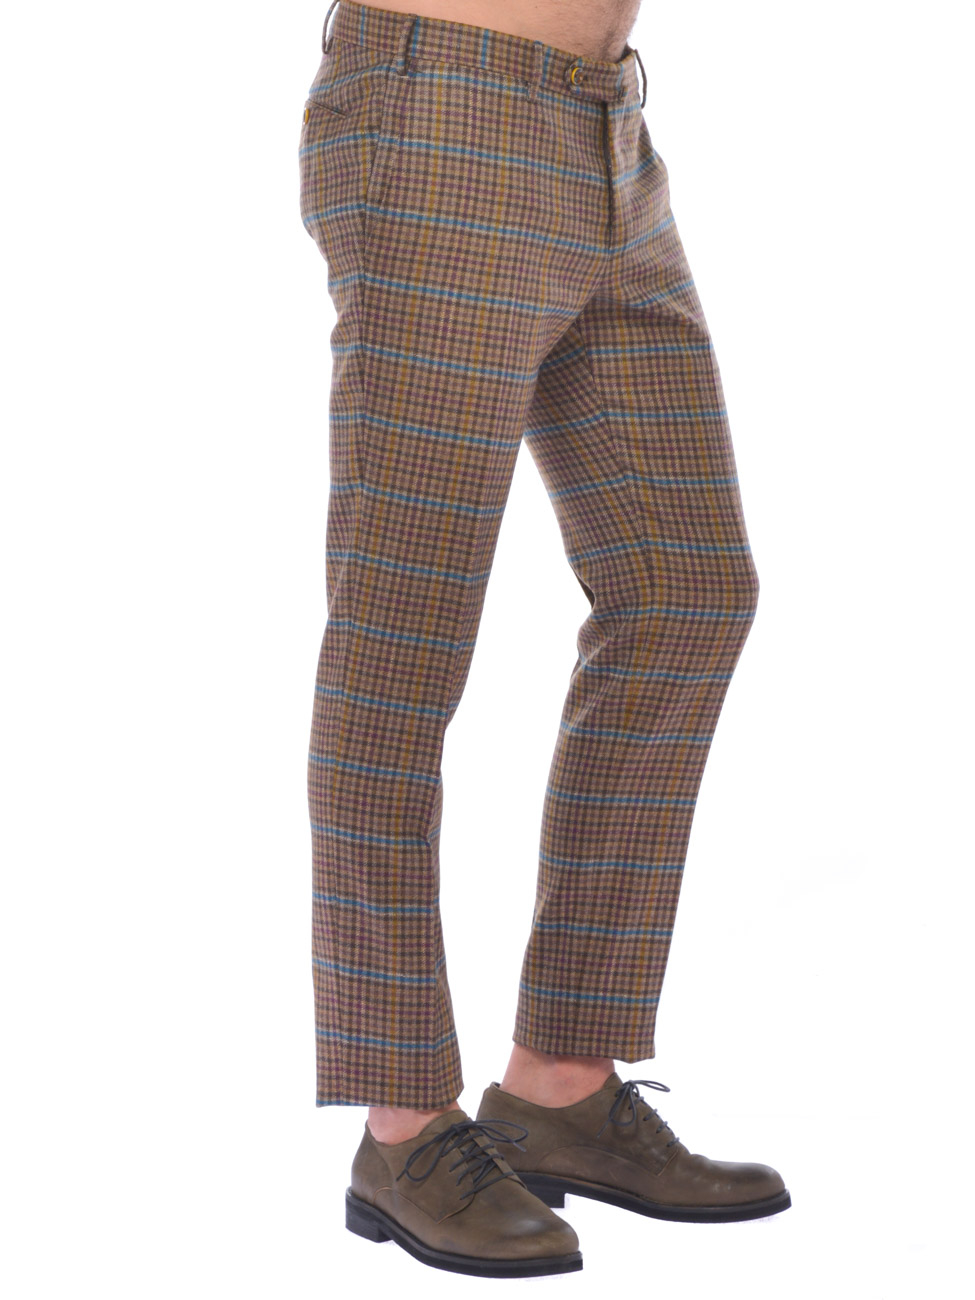 Pantalone uomo PT01 chino in lana vergine a quadri